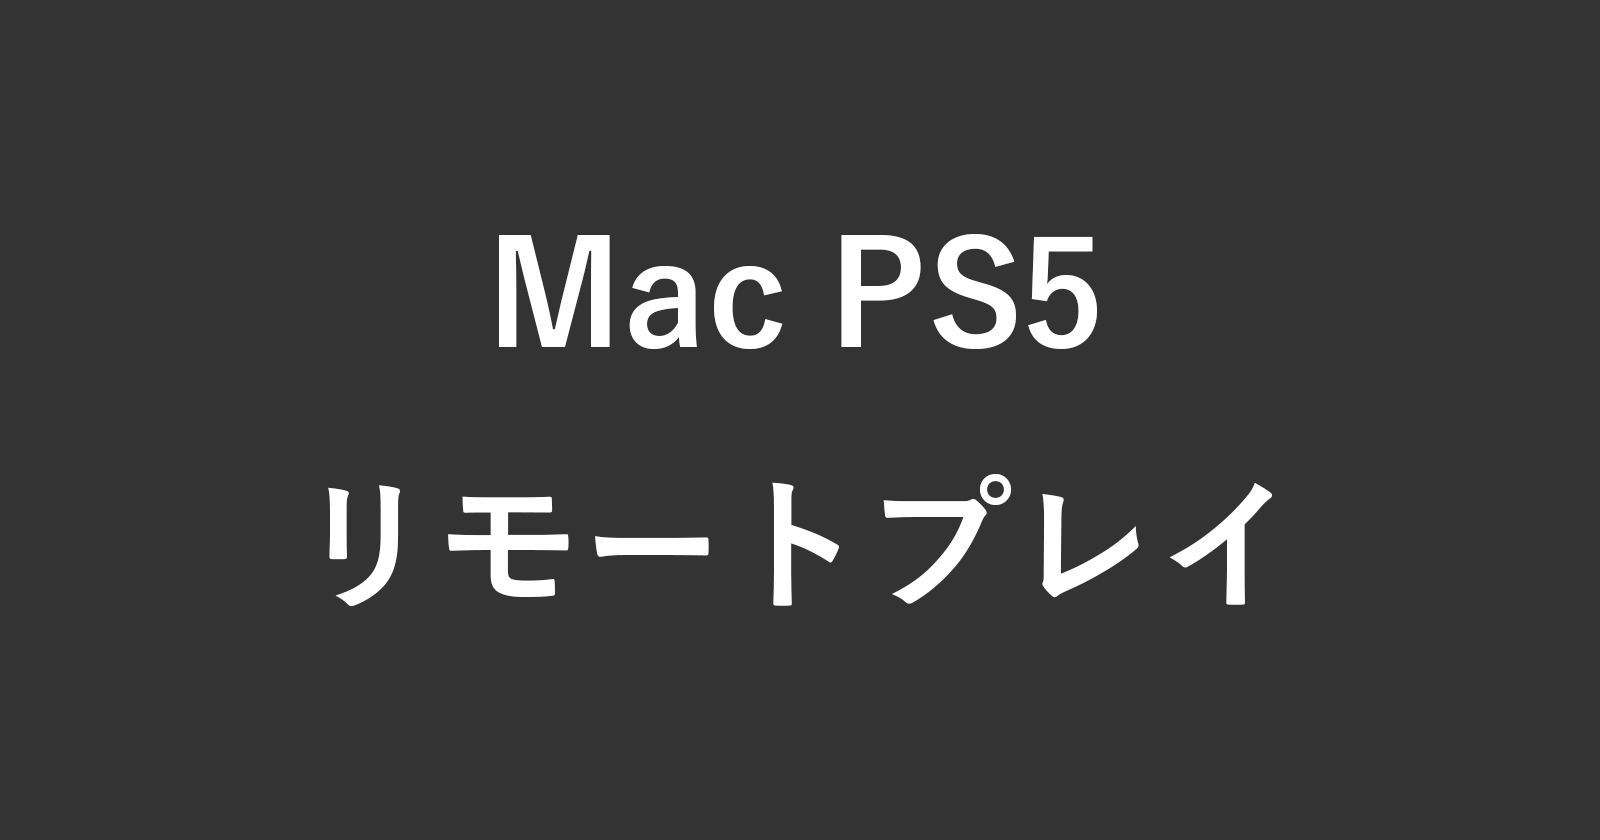 mac ps5 remote play